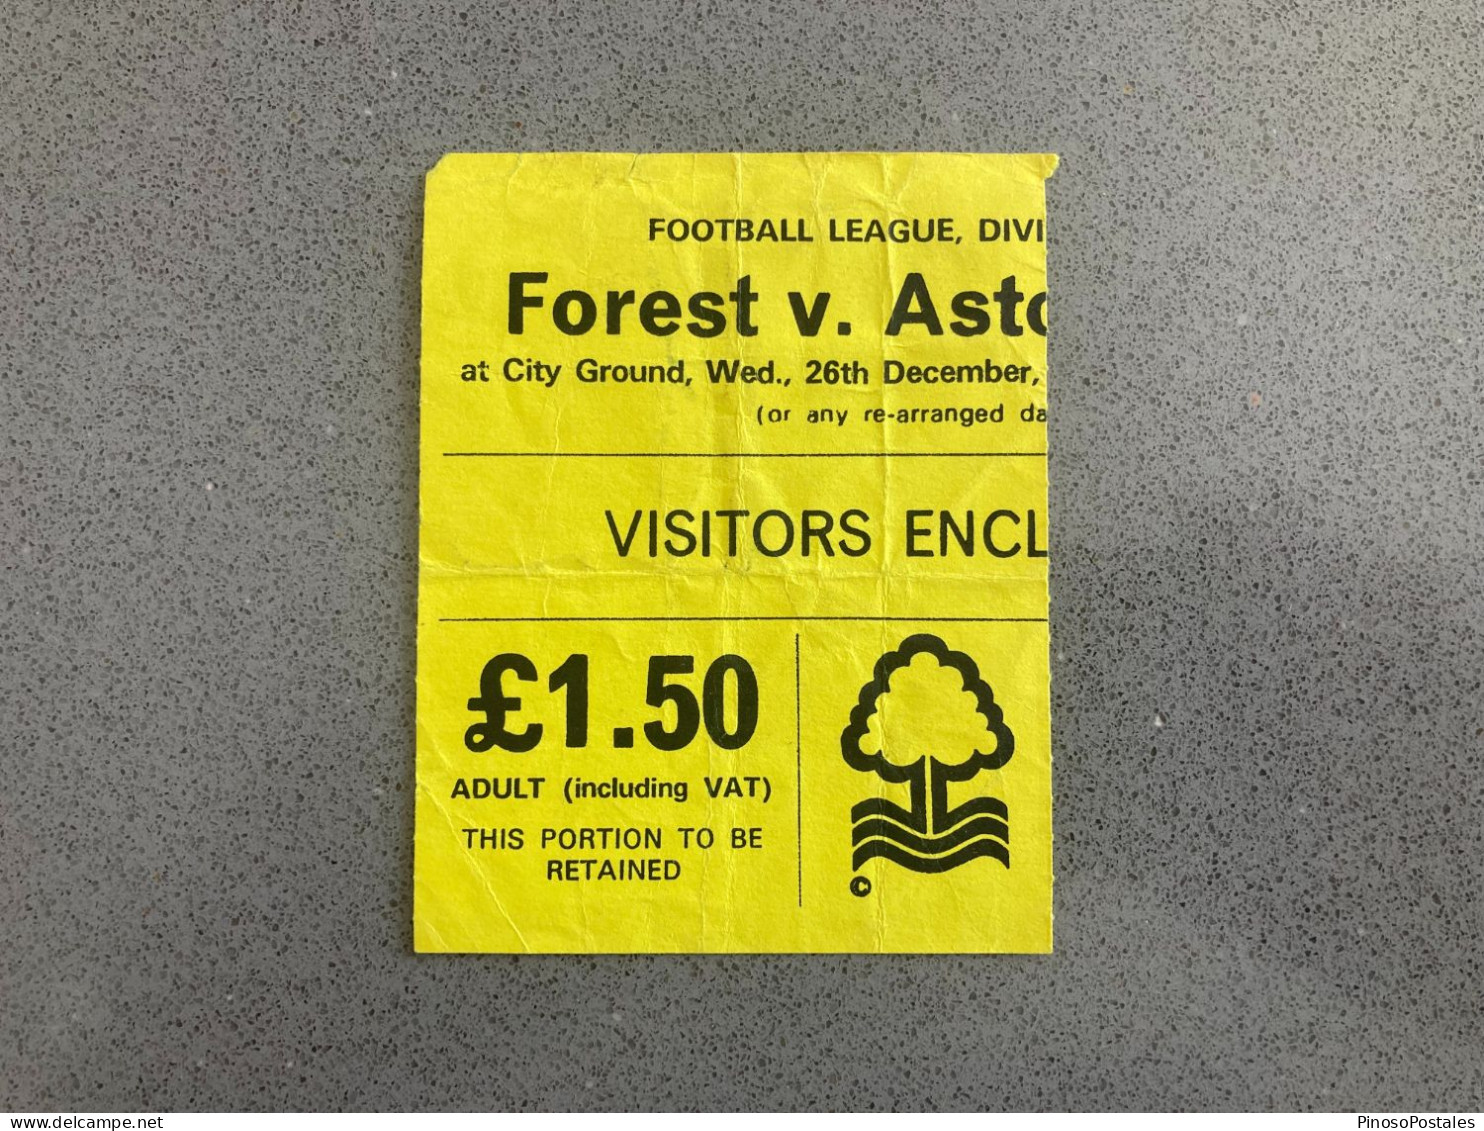 Nottingham Forest V Aston Villa 1979-80 Match Ticket - Match Tickets